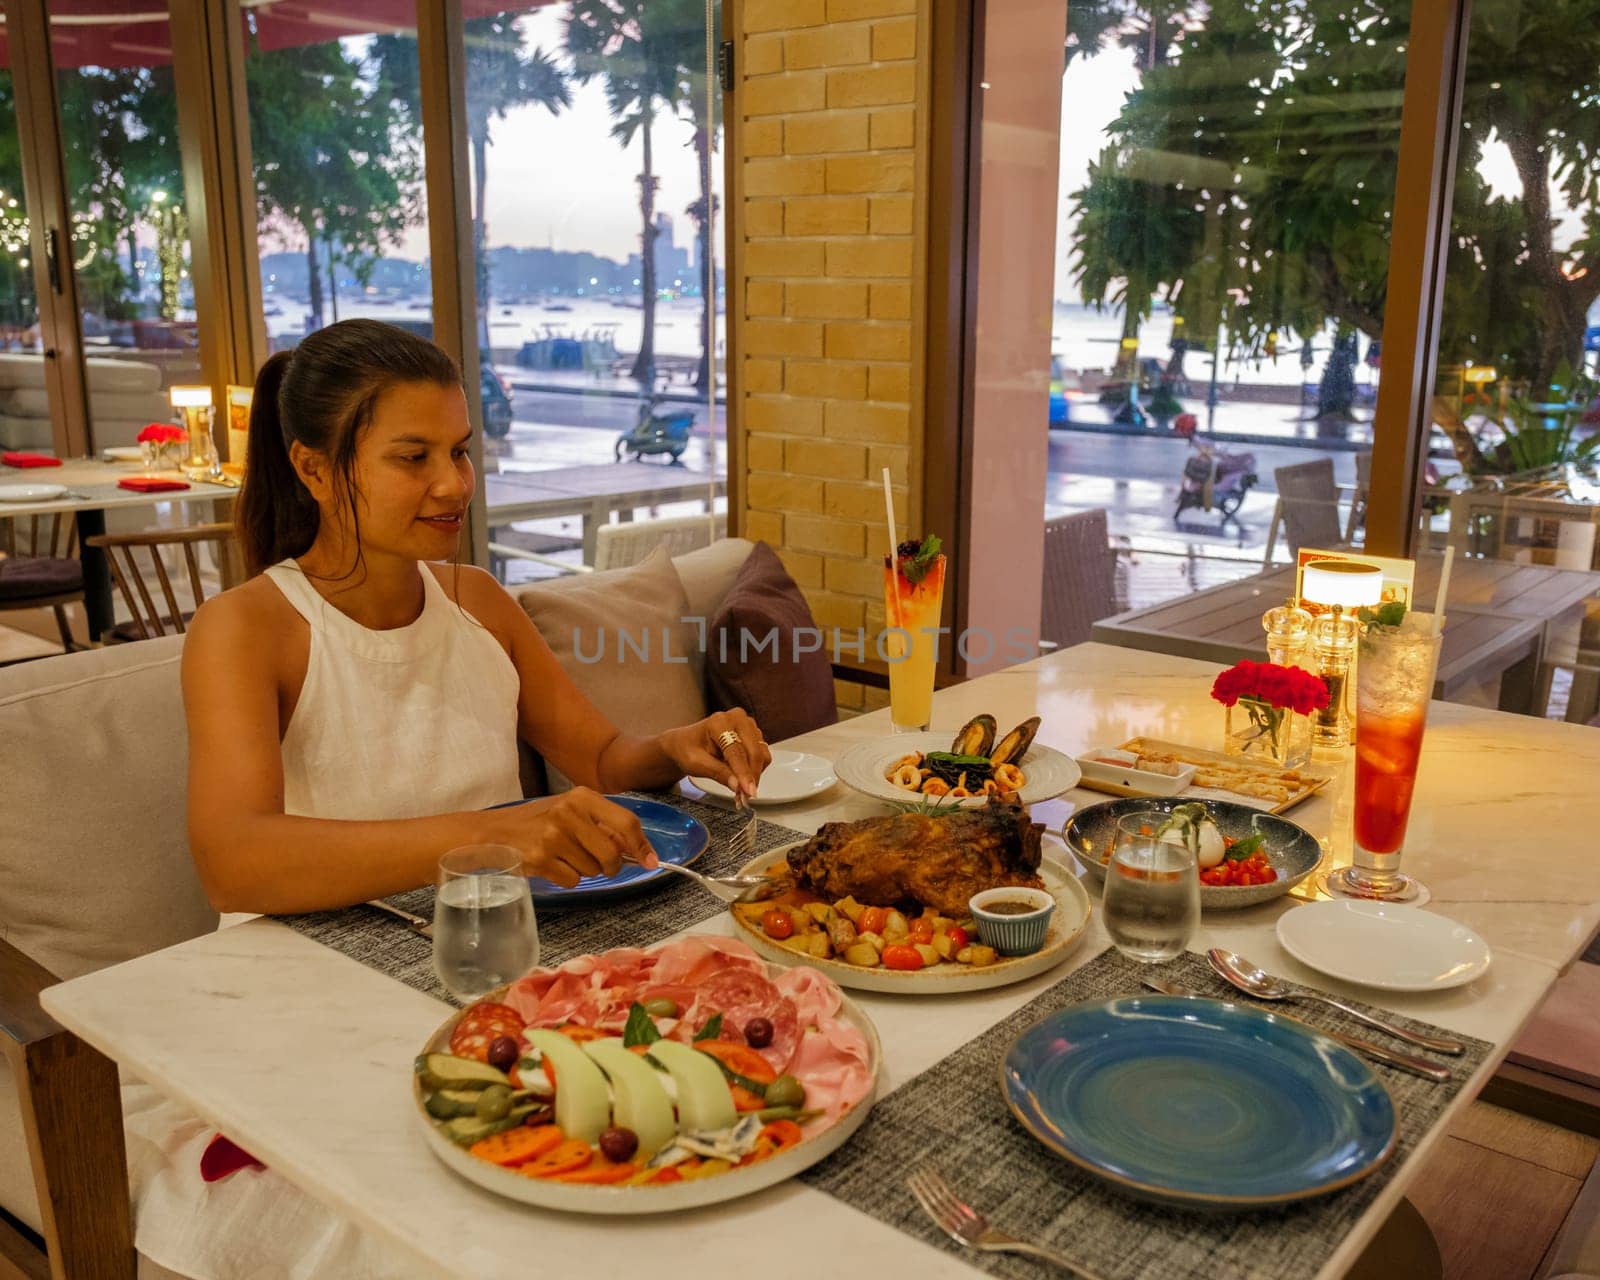 dinner in an Italian restaurant in Thailand by fokkebok